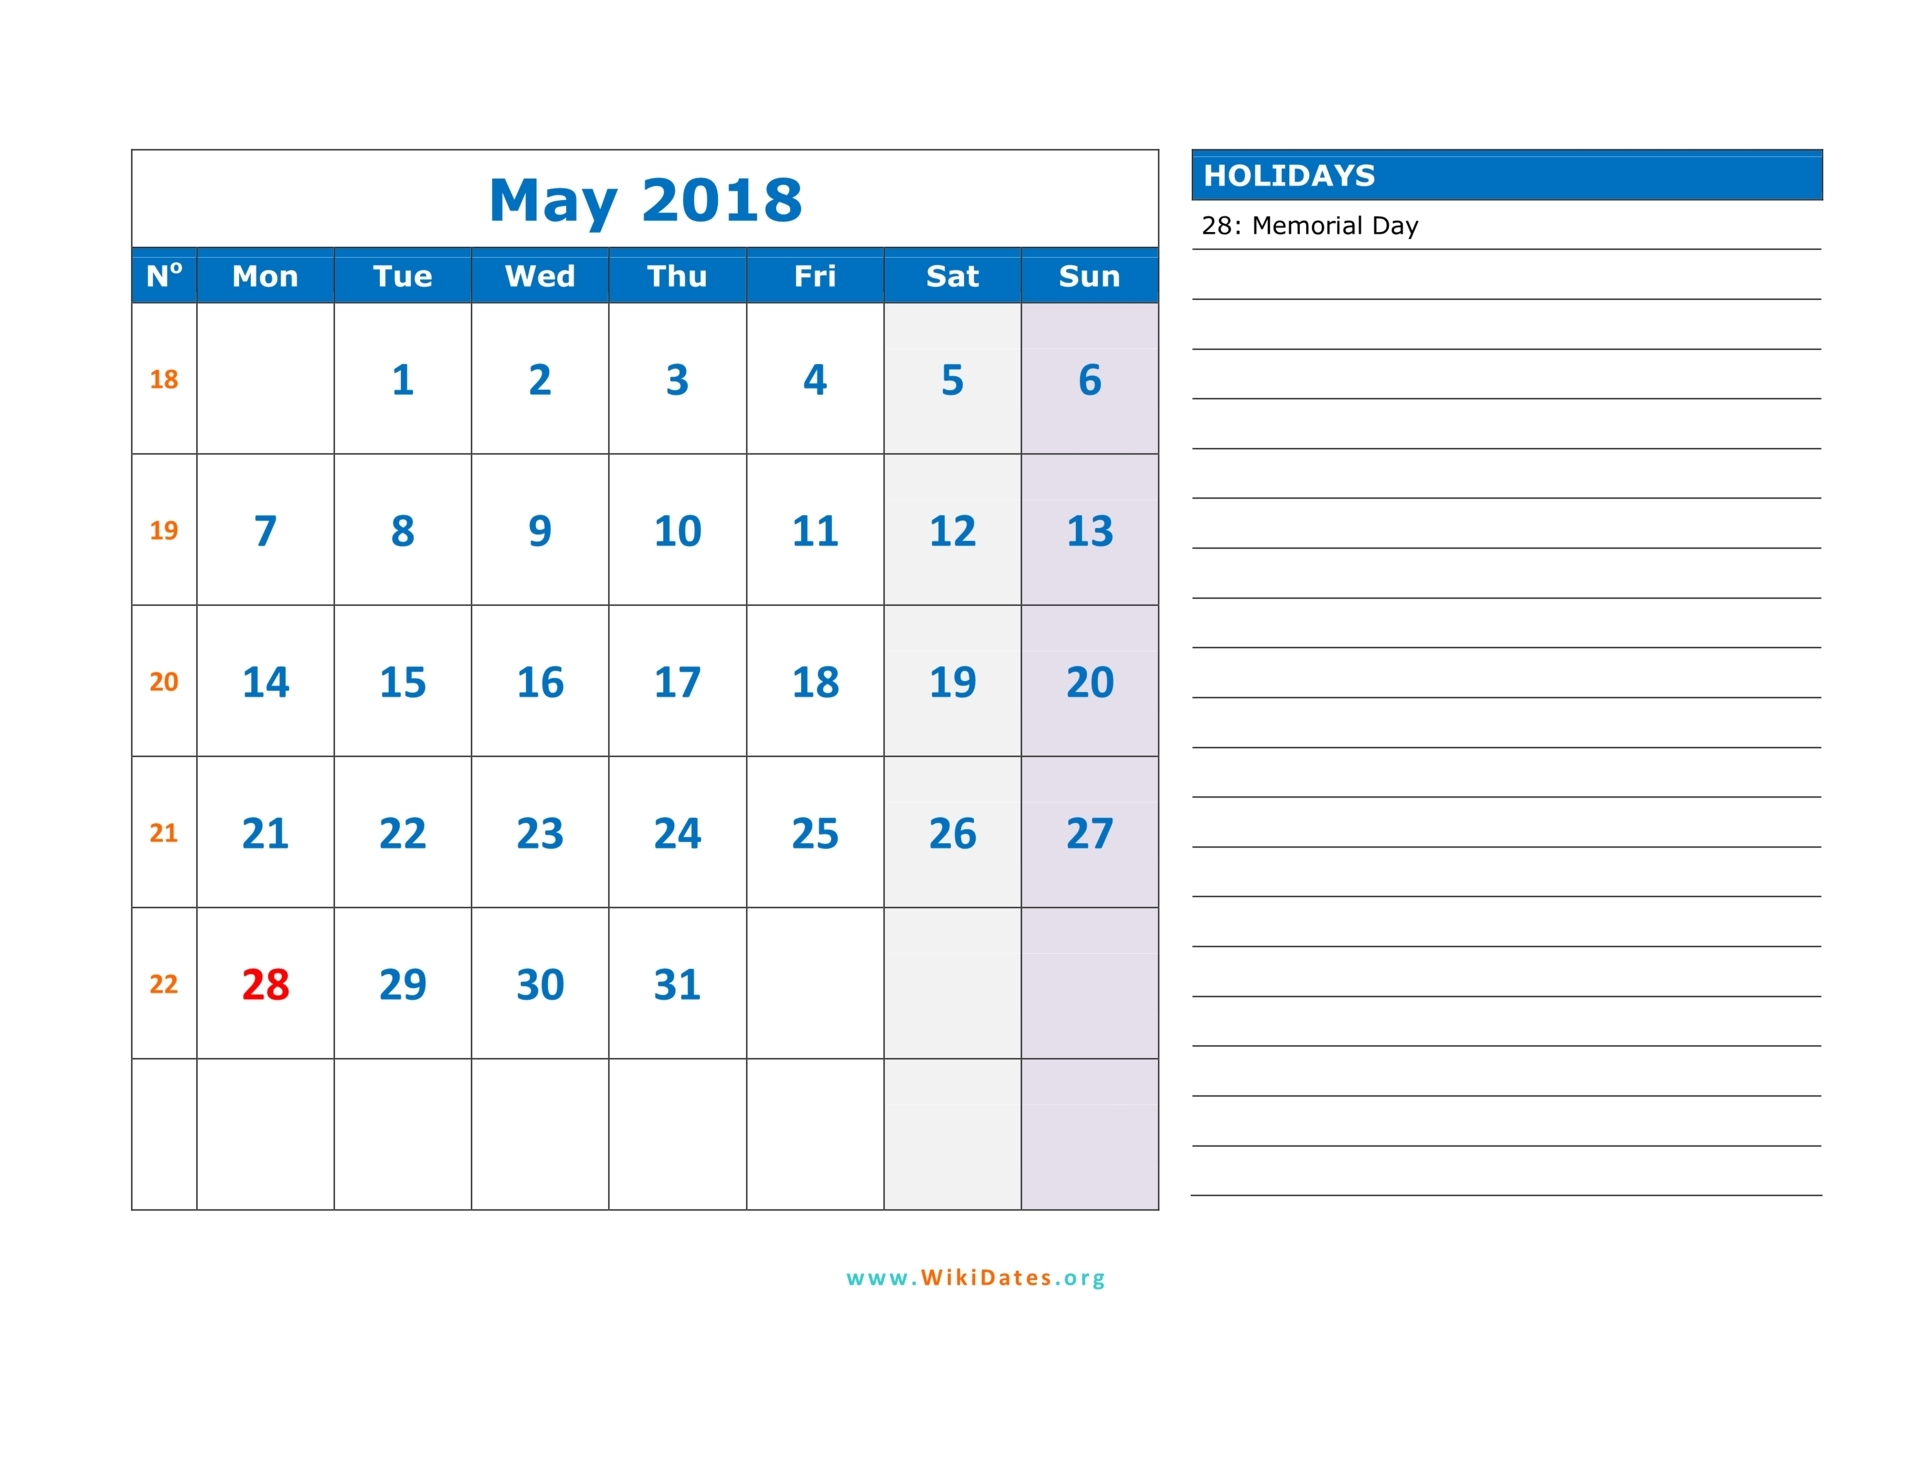 May 2018 Calendar WikiDates